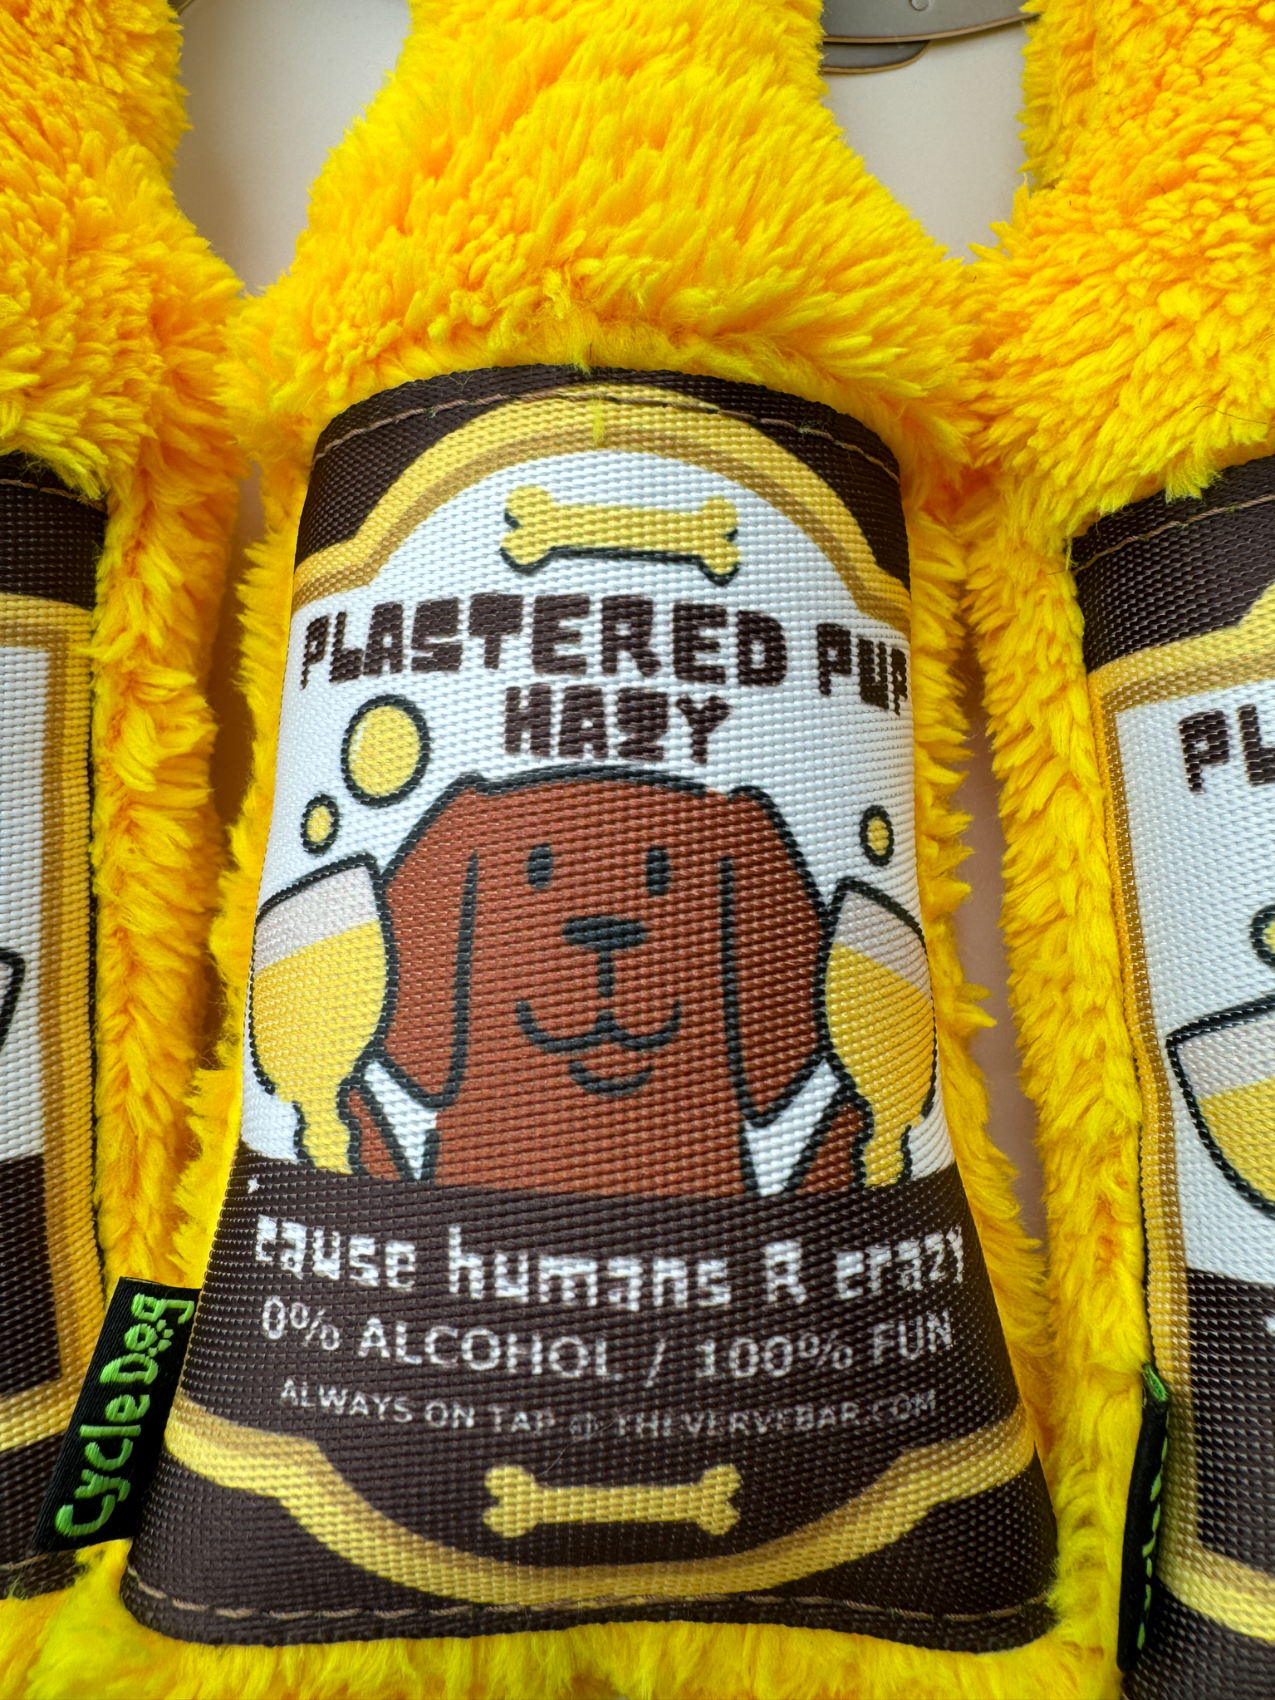 close up of label on dog beer bottle toy